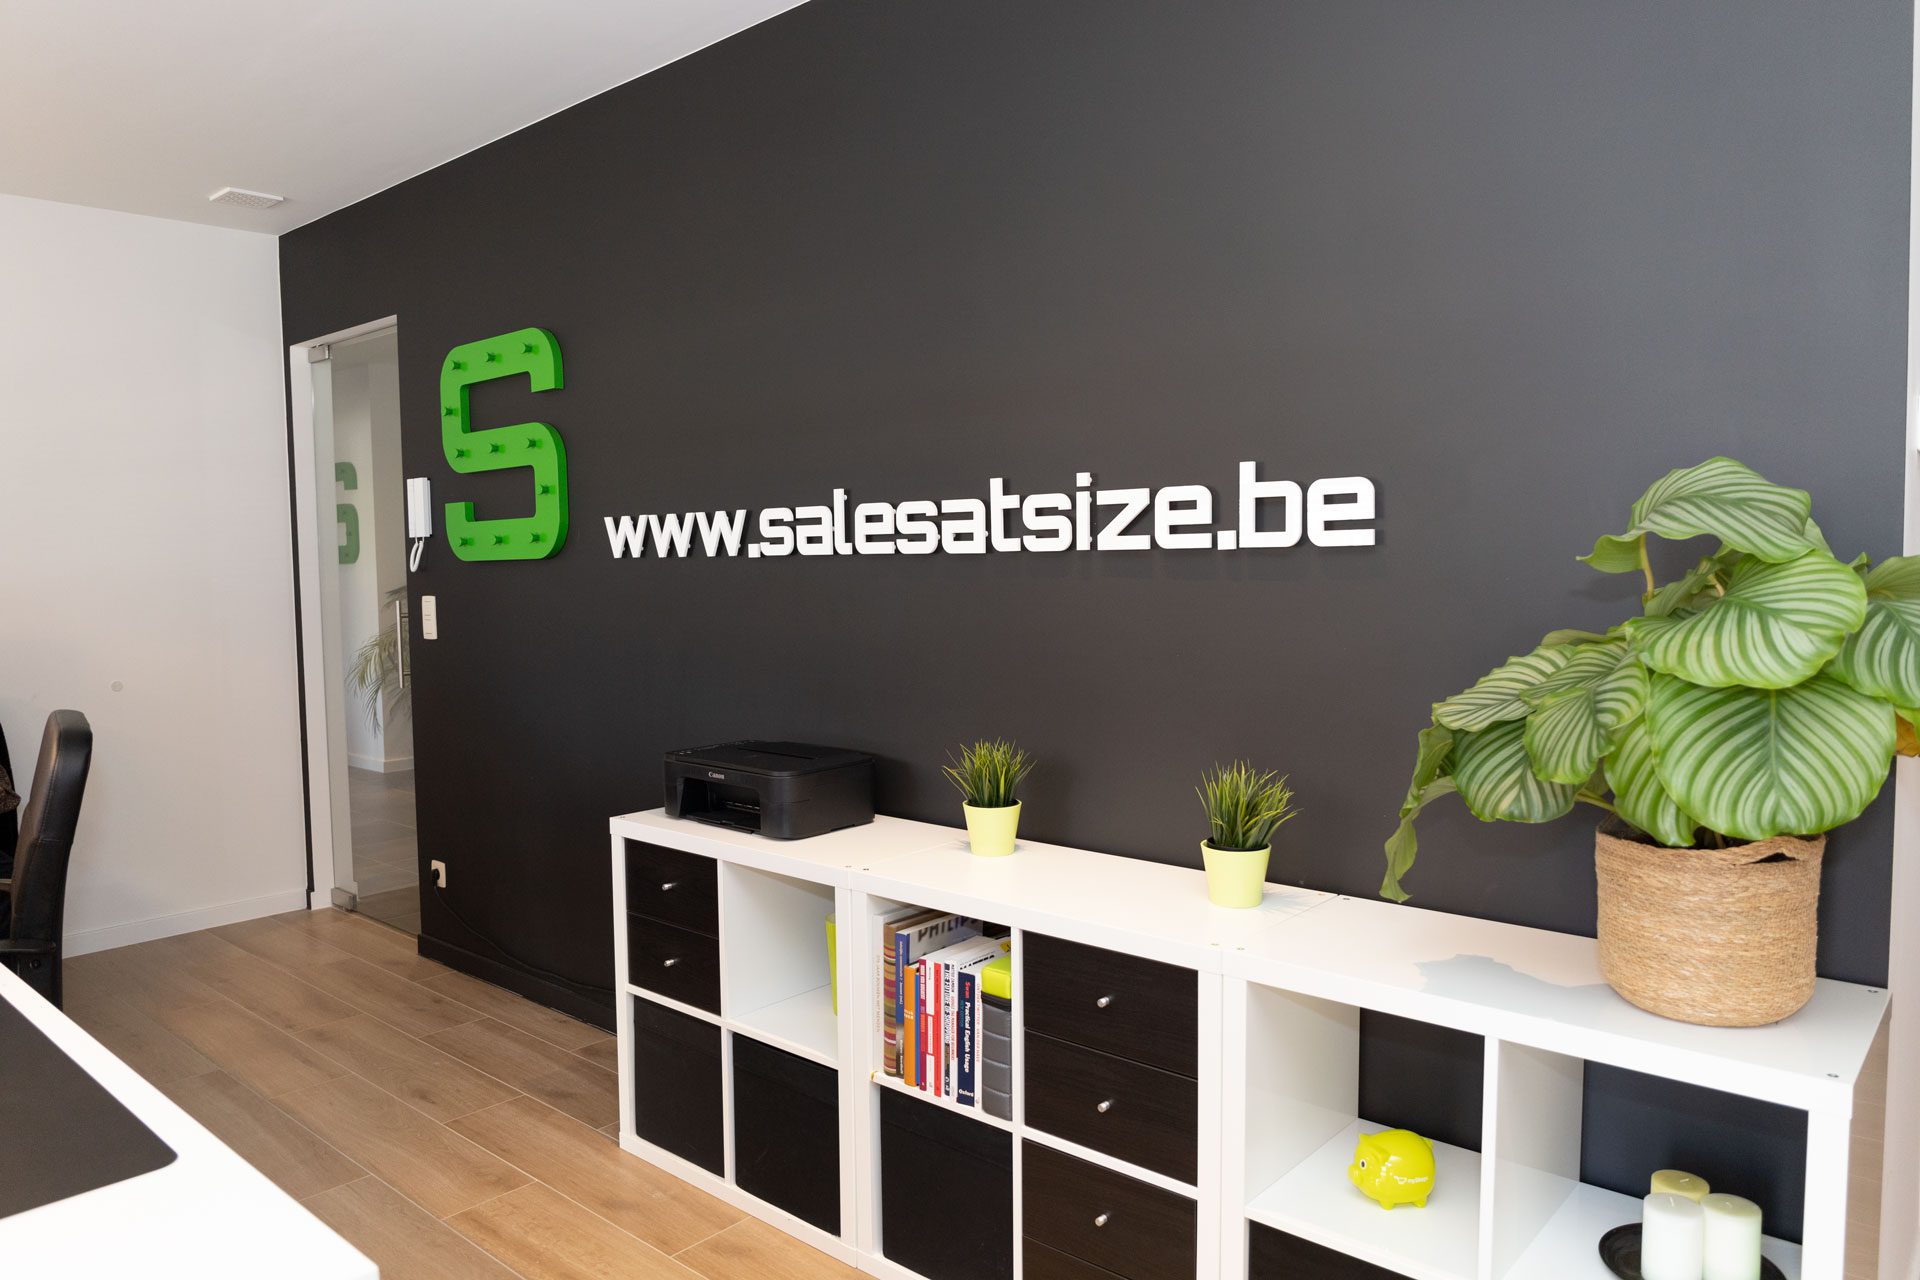 Sales at Size logo muur artwork